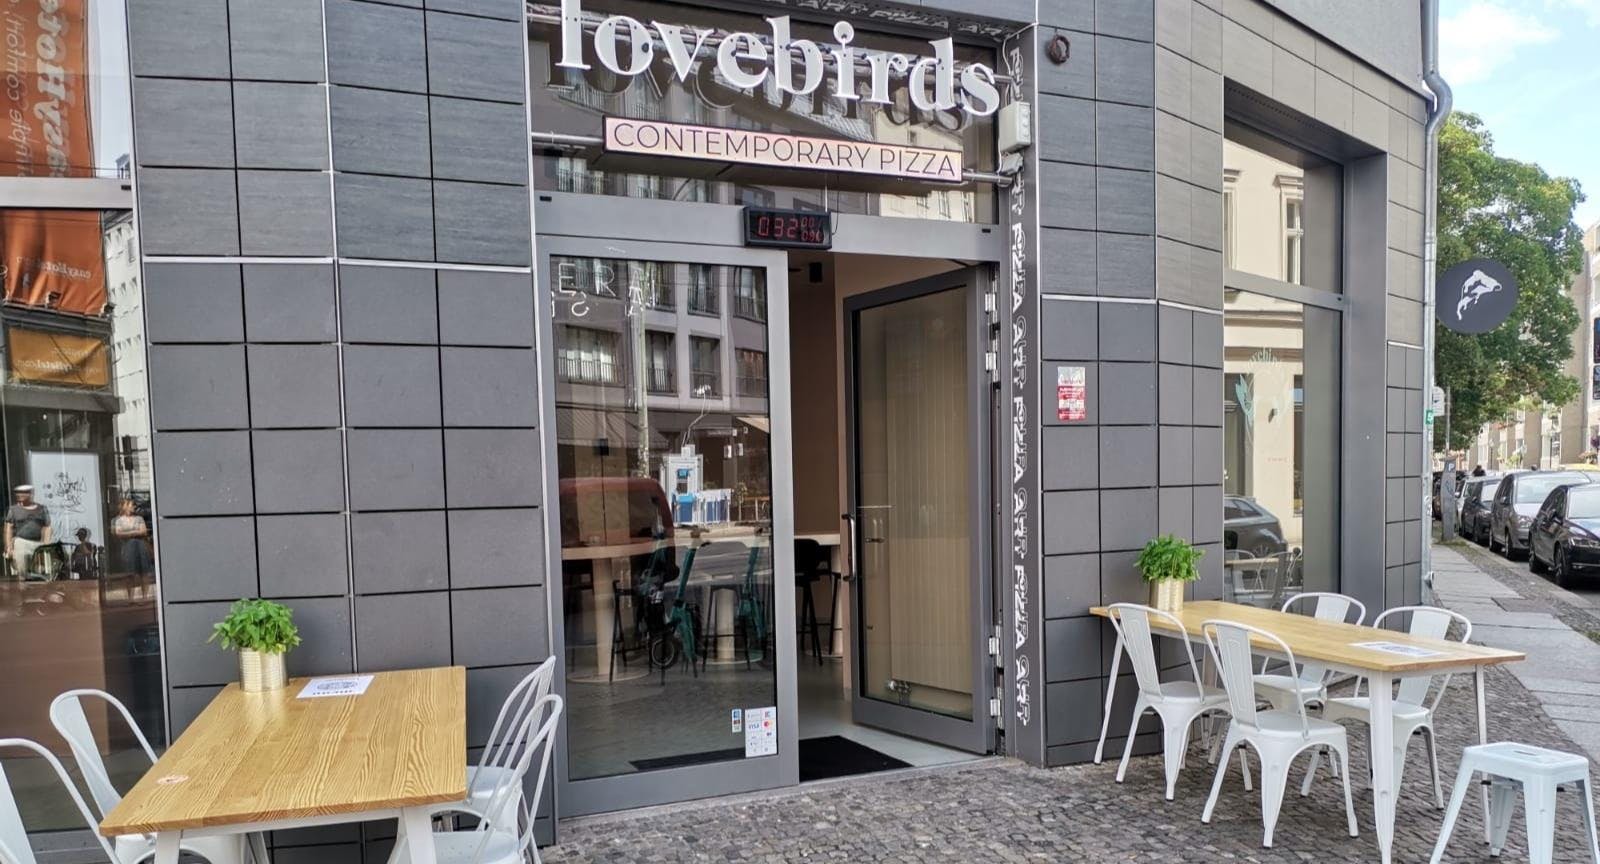 Photo of restaurant Lovebirds - Contemporary Pizza in Prenzlauer Berg, Berlin